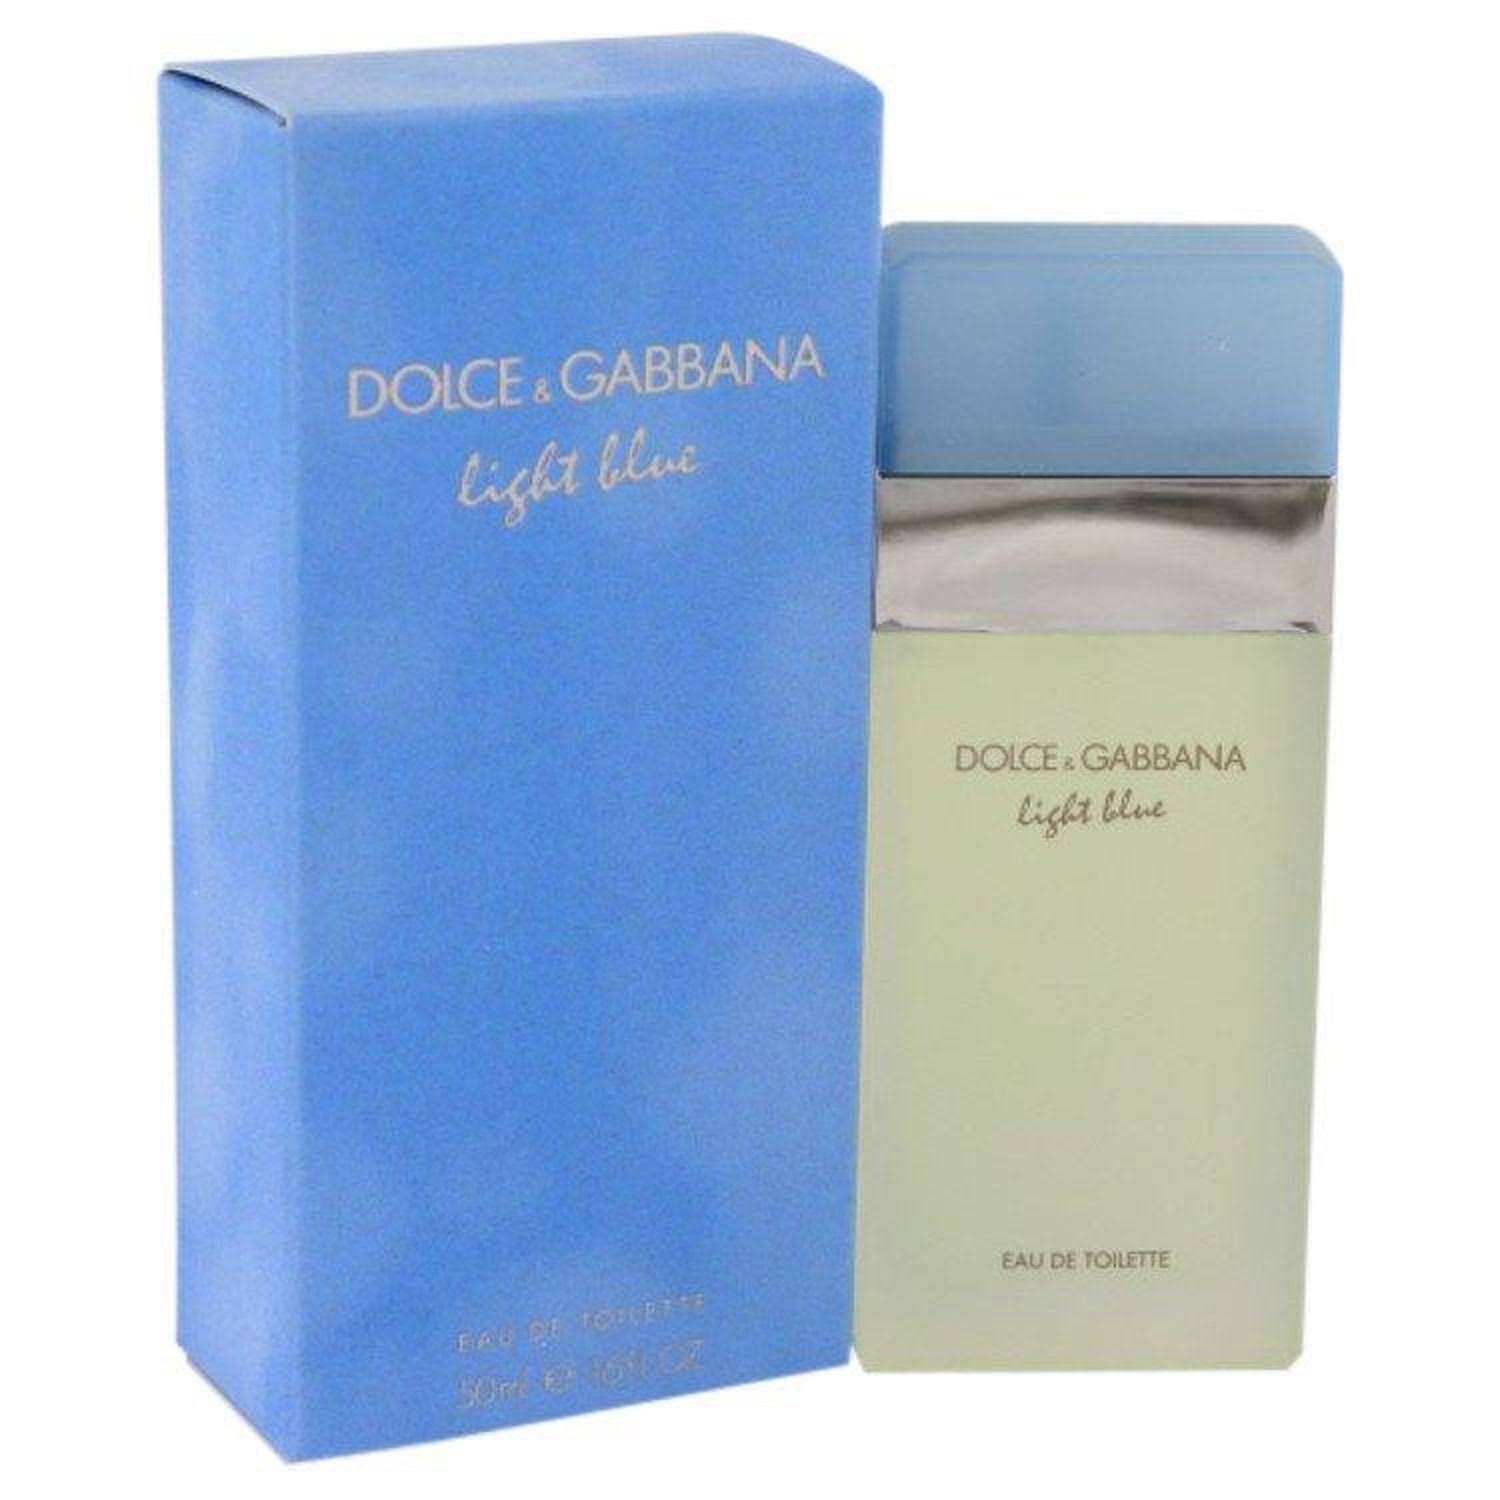 Dolce & Gabbana Eau De Toilette Spray - 1.7 oz bottle